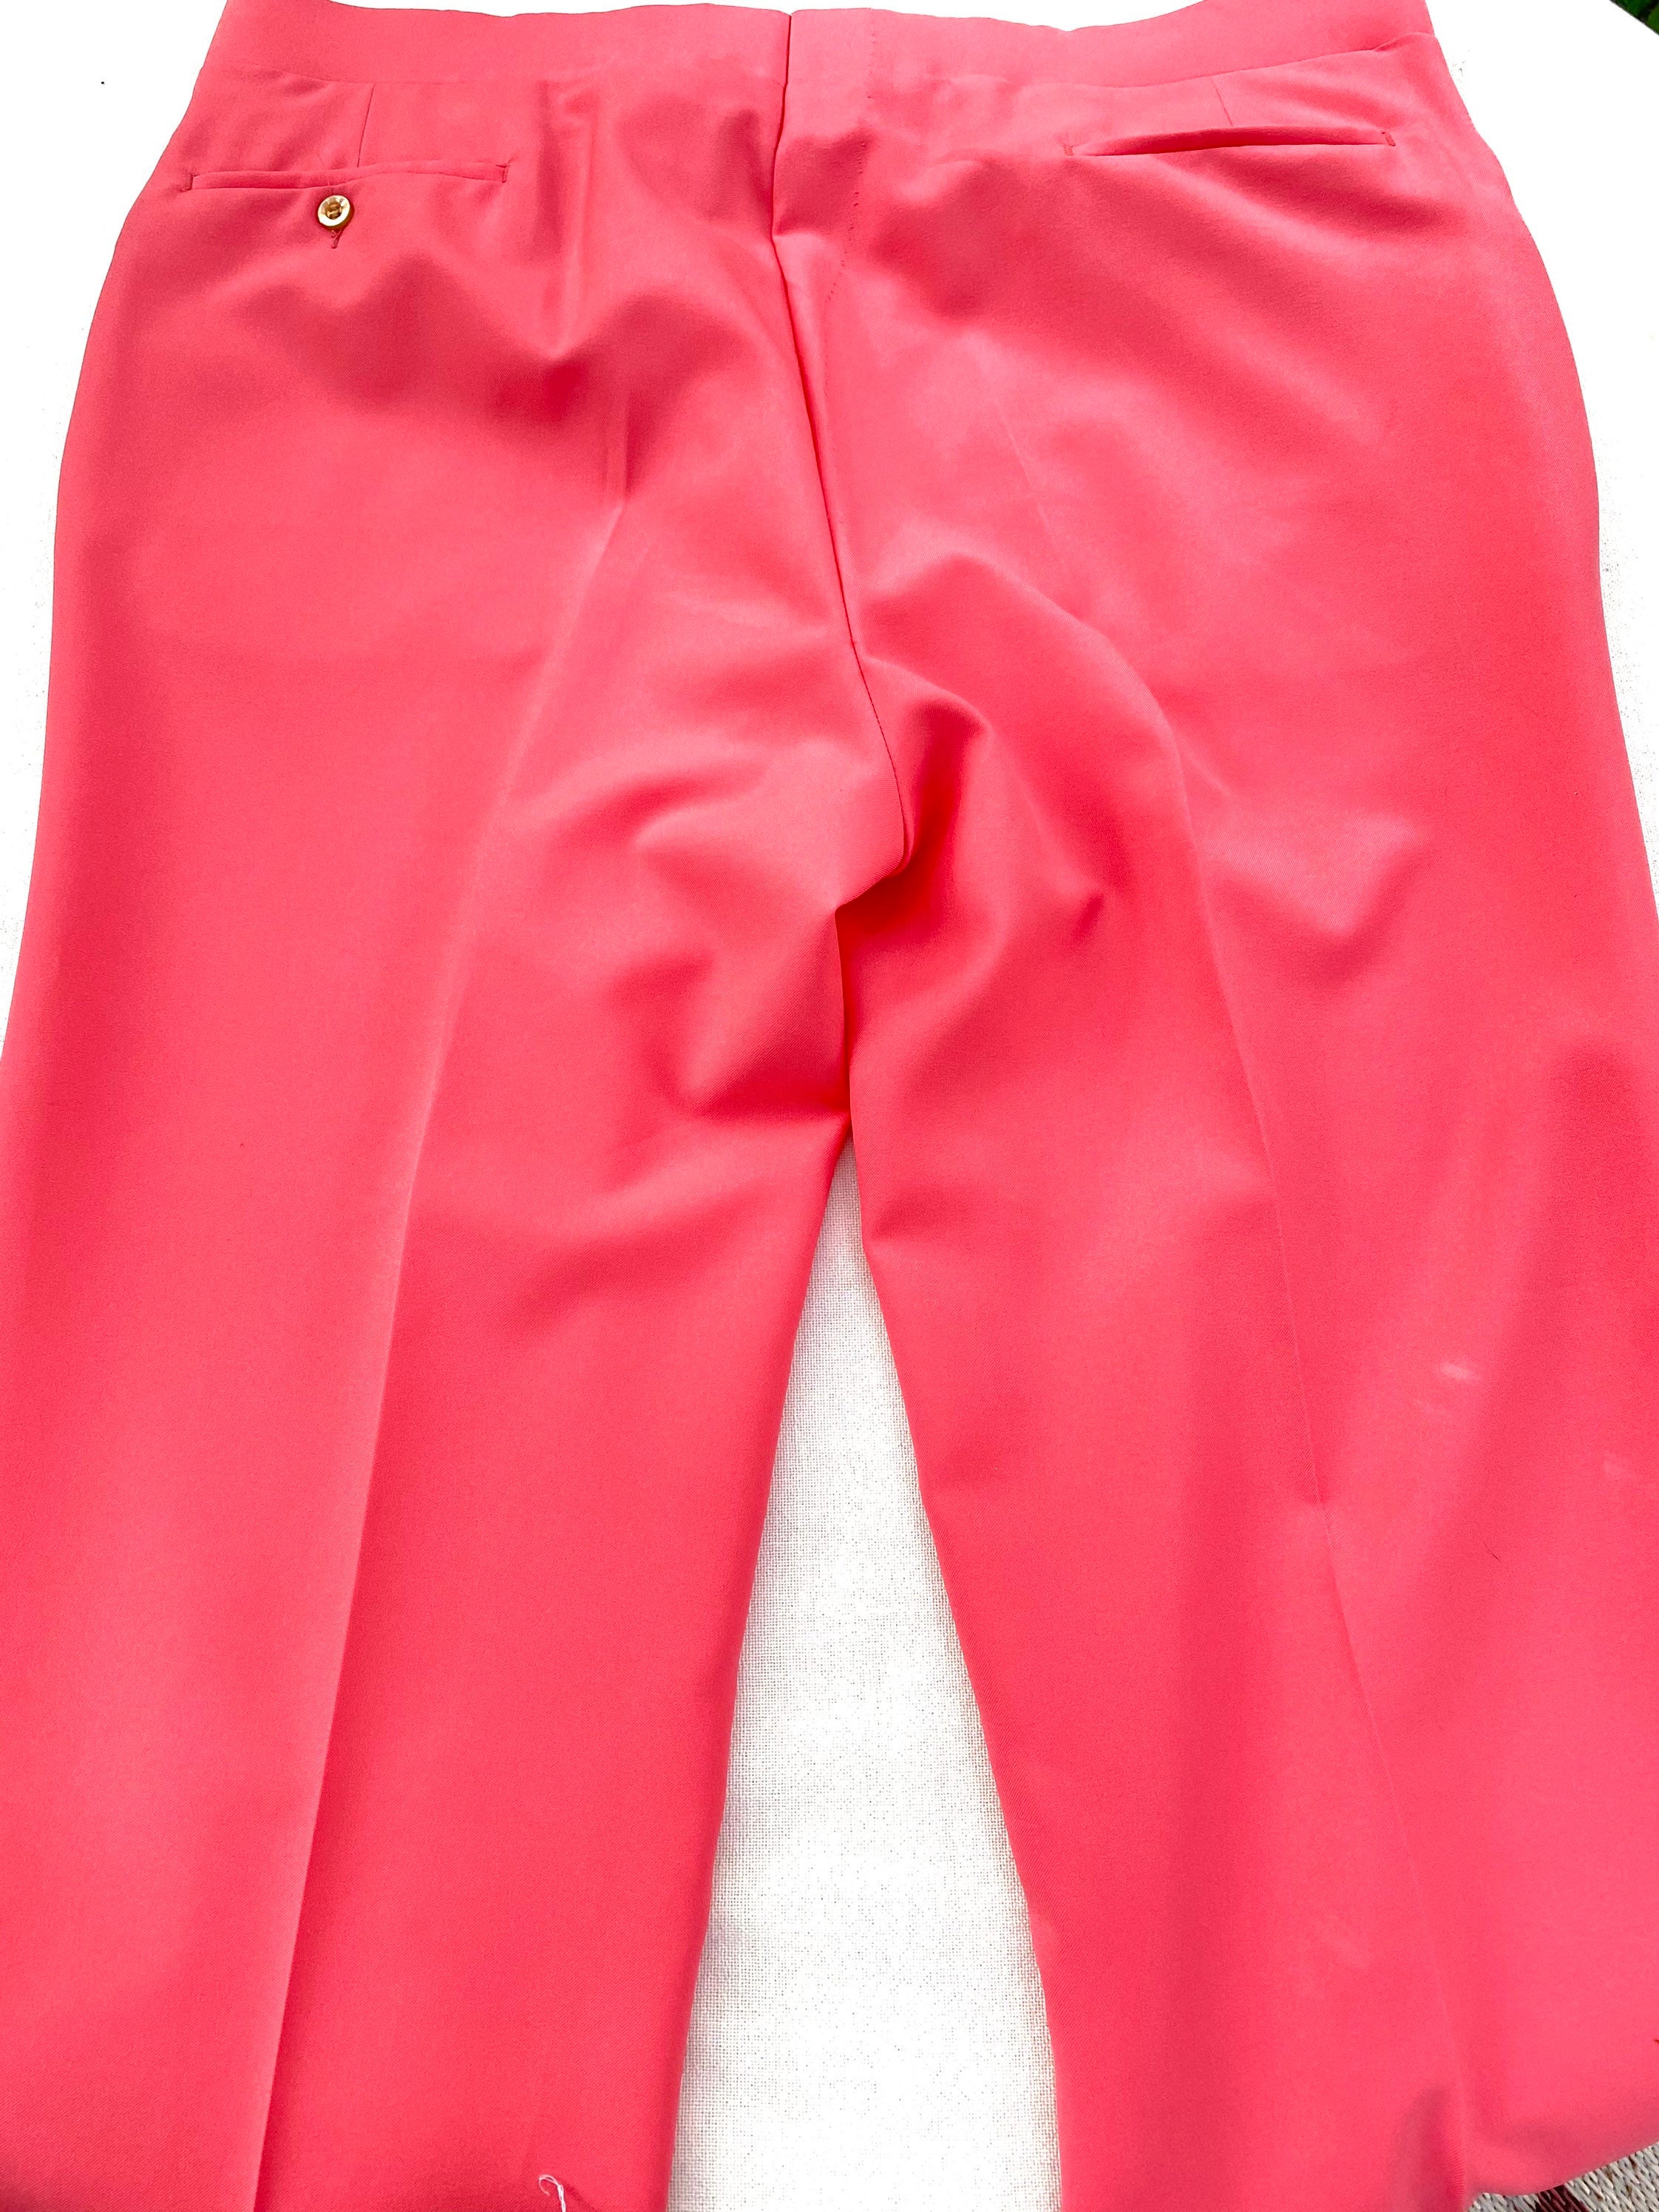 Big Man Pink Polyester Pants Vintage 1950s Mid Century Modern | Etsy